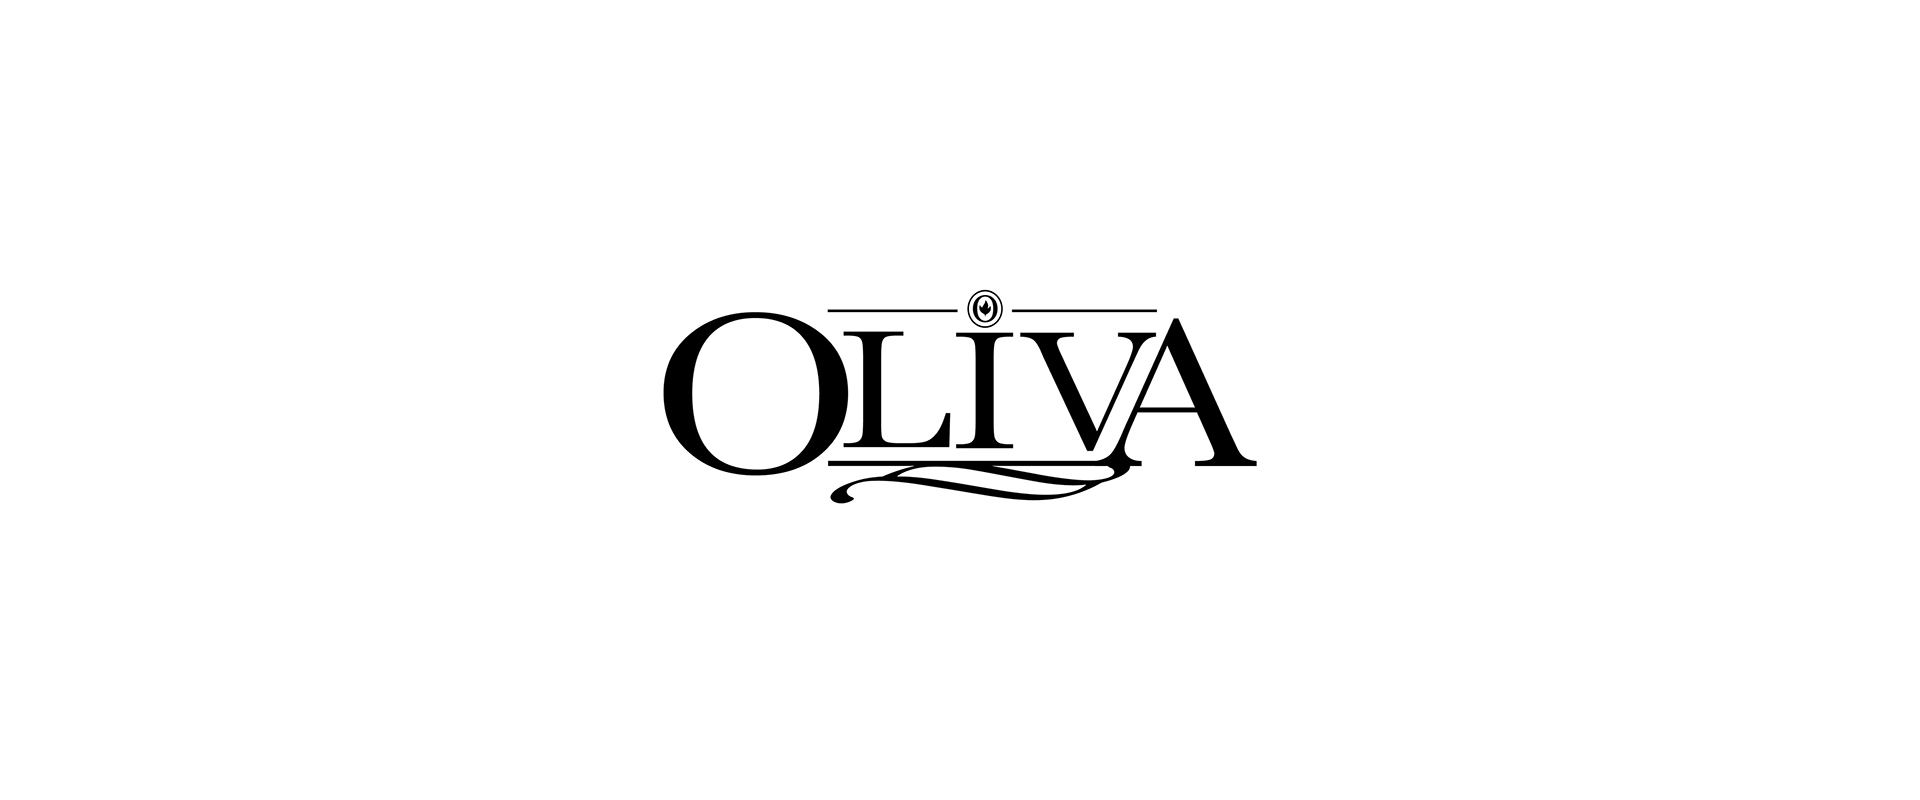 New World Cigars > Oliva